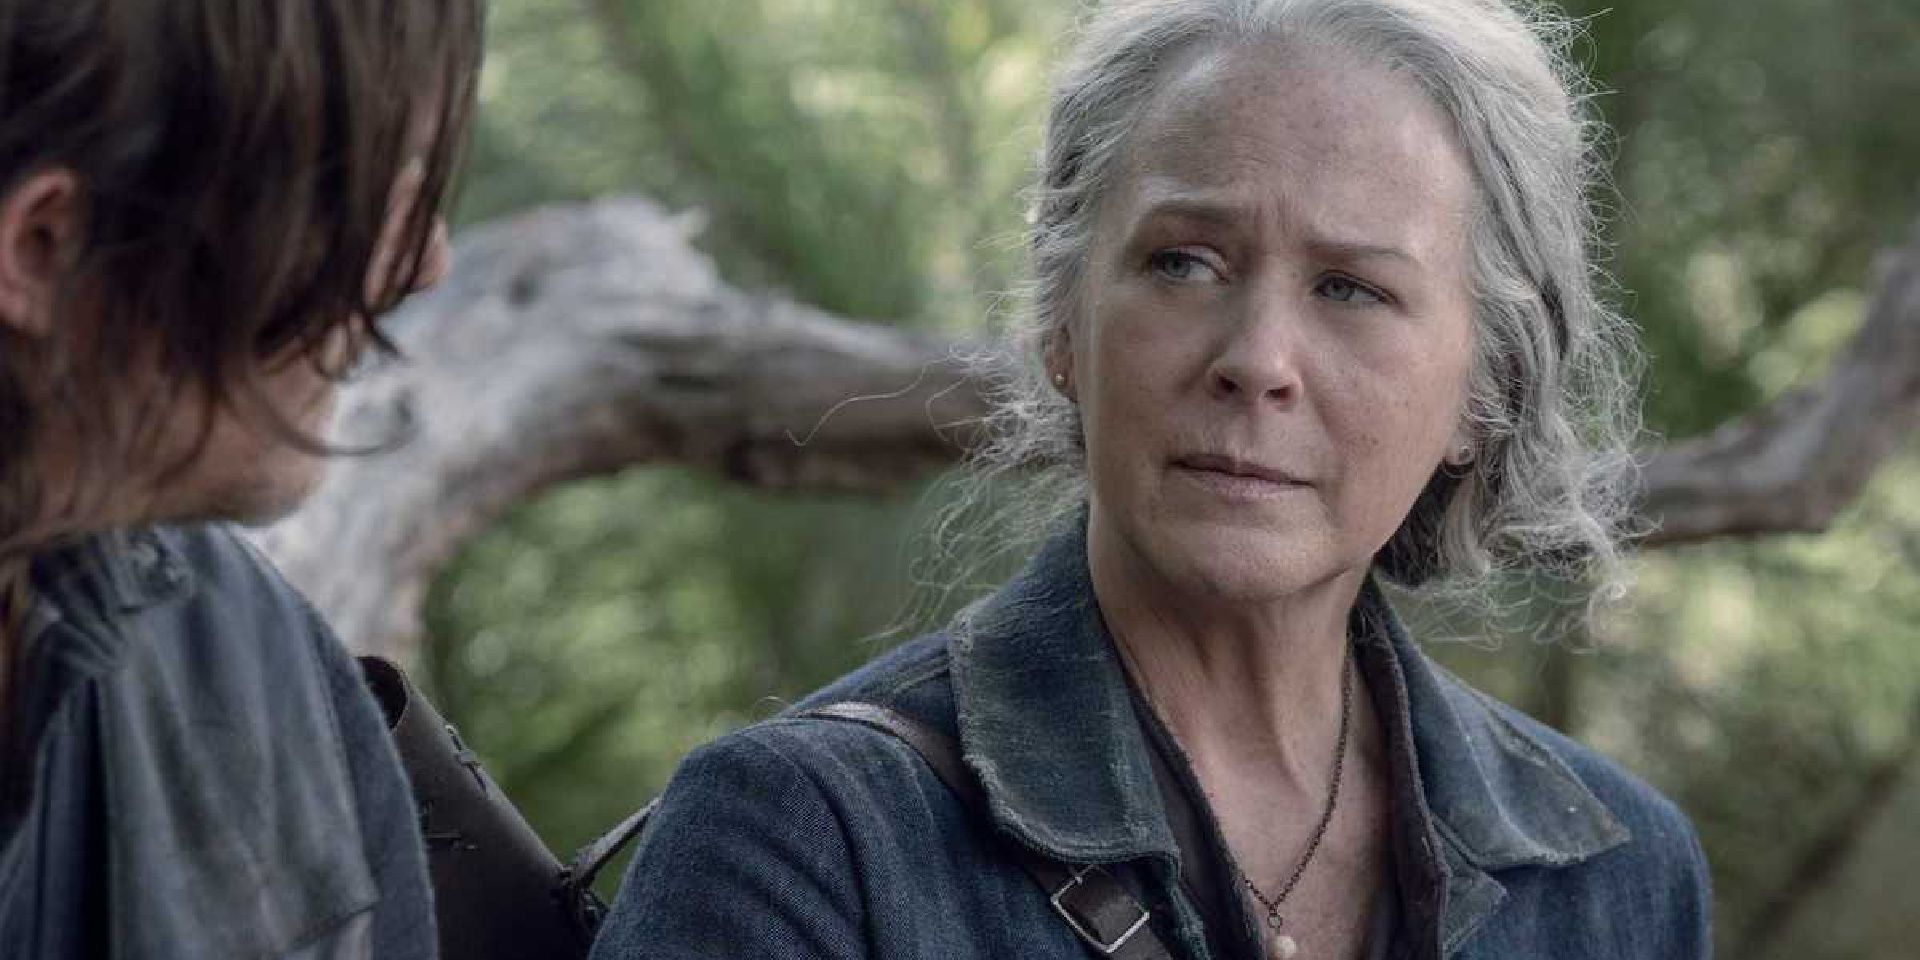 Melissa McBride stars as Carol in The Walking Dead